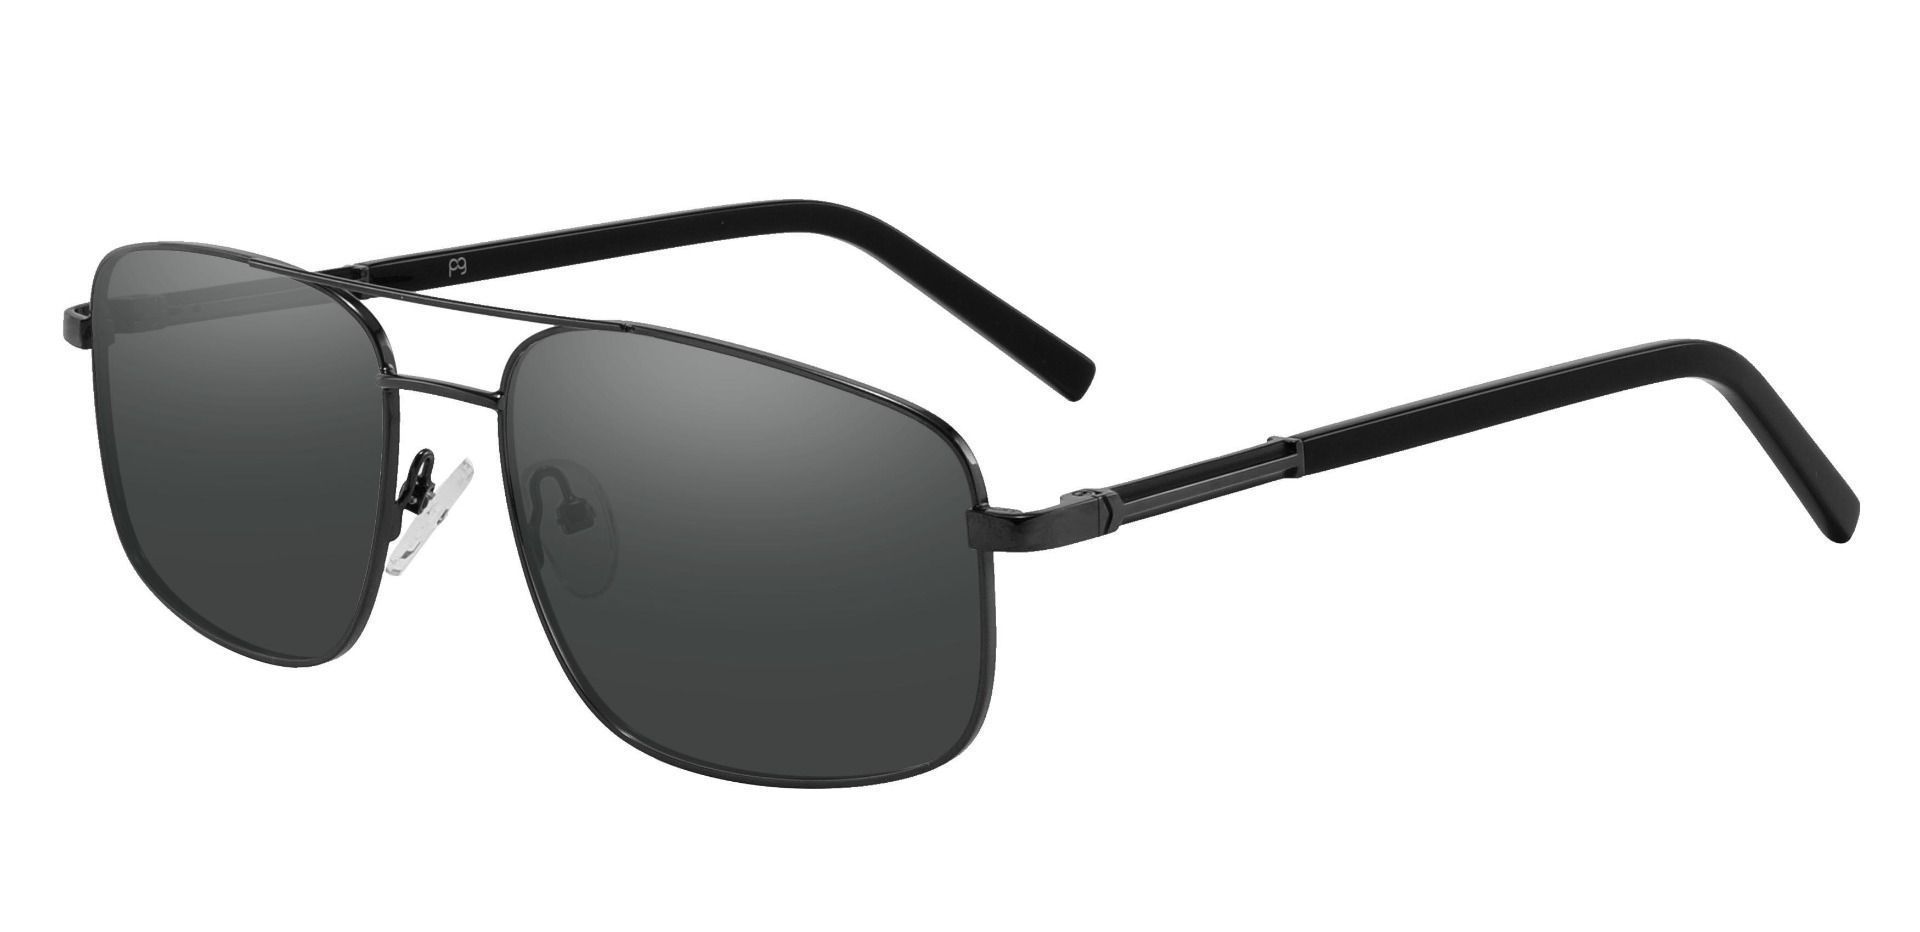 Davenport Aviator Lined Bifocal Sunglasses - Black Frame With Gray Lenses